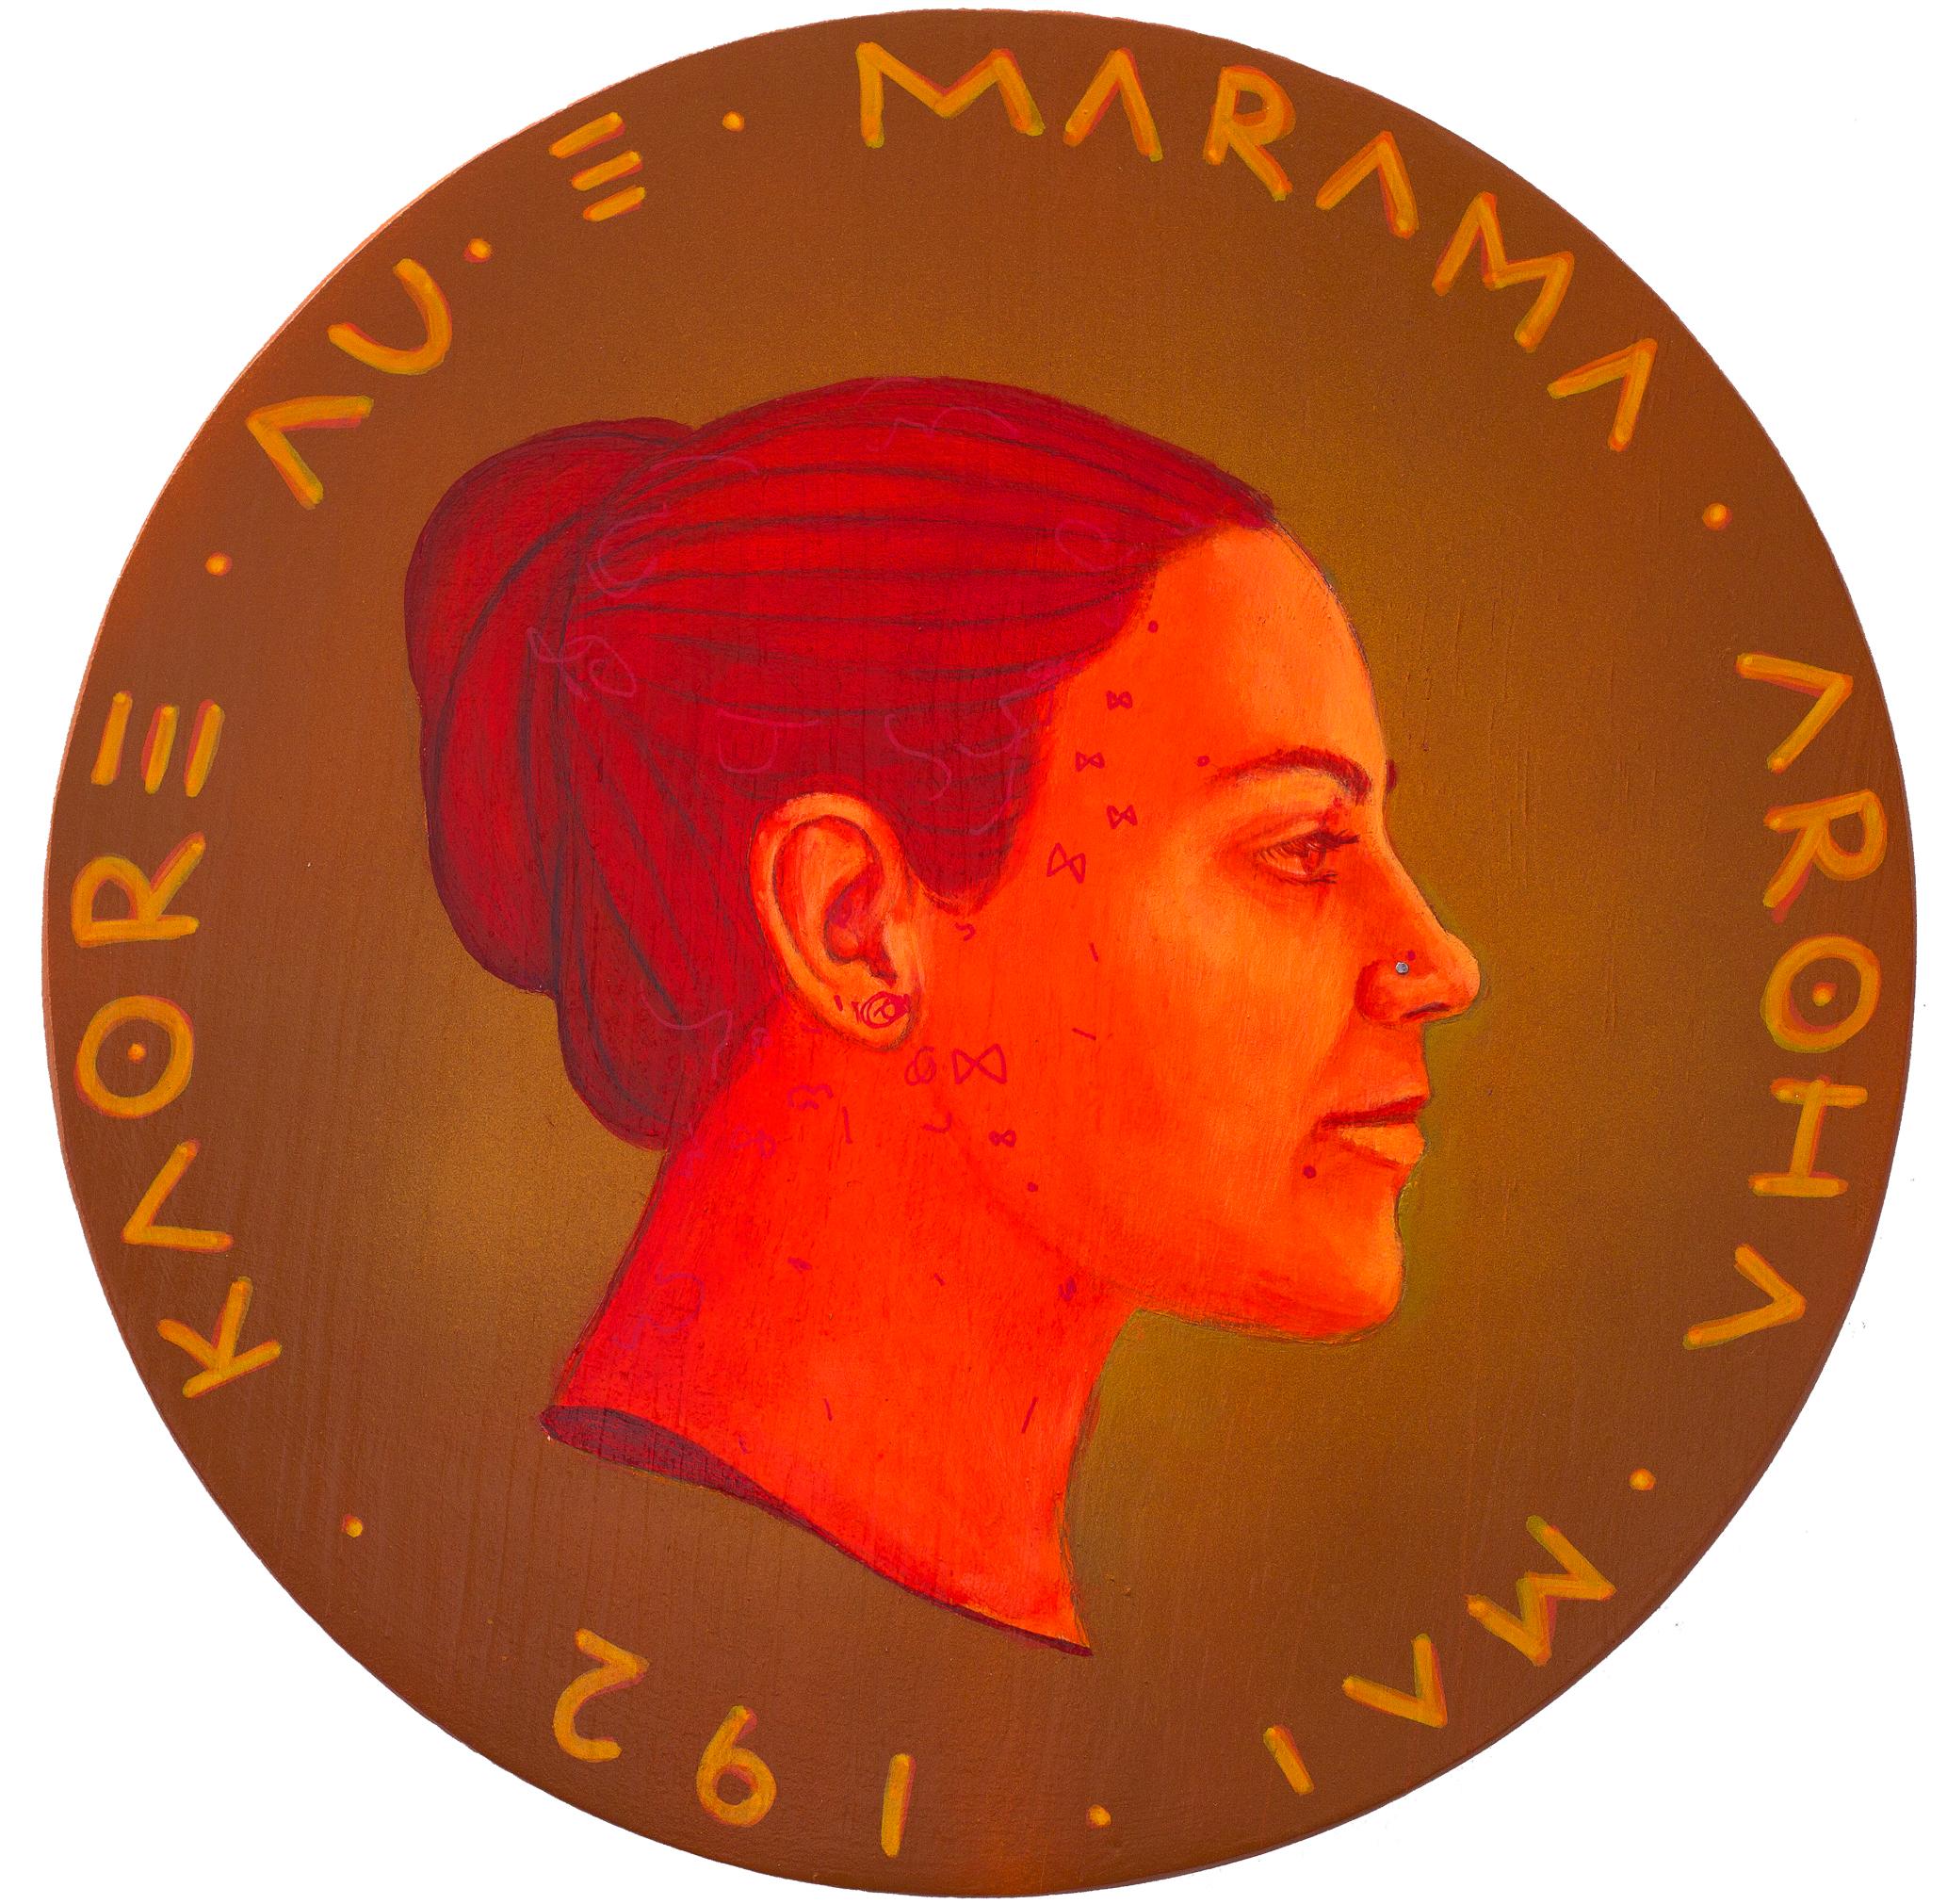 Natasha Lelenco Portrait Painting - Contemporary Figurative Pop Portrait on Wooden Wood Coin. Maori. "Currency #218"